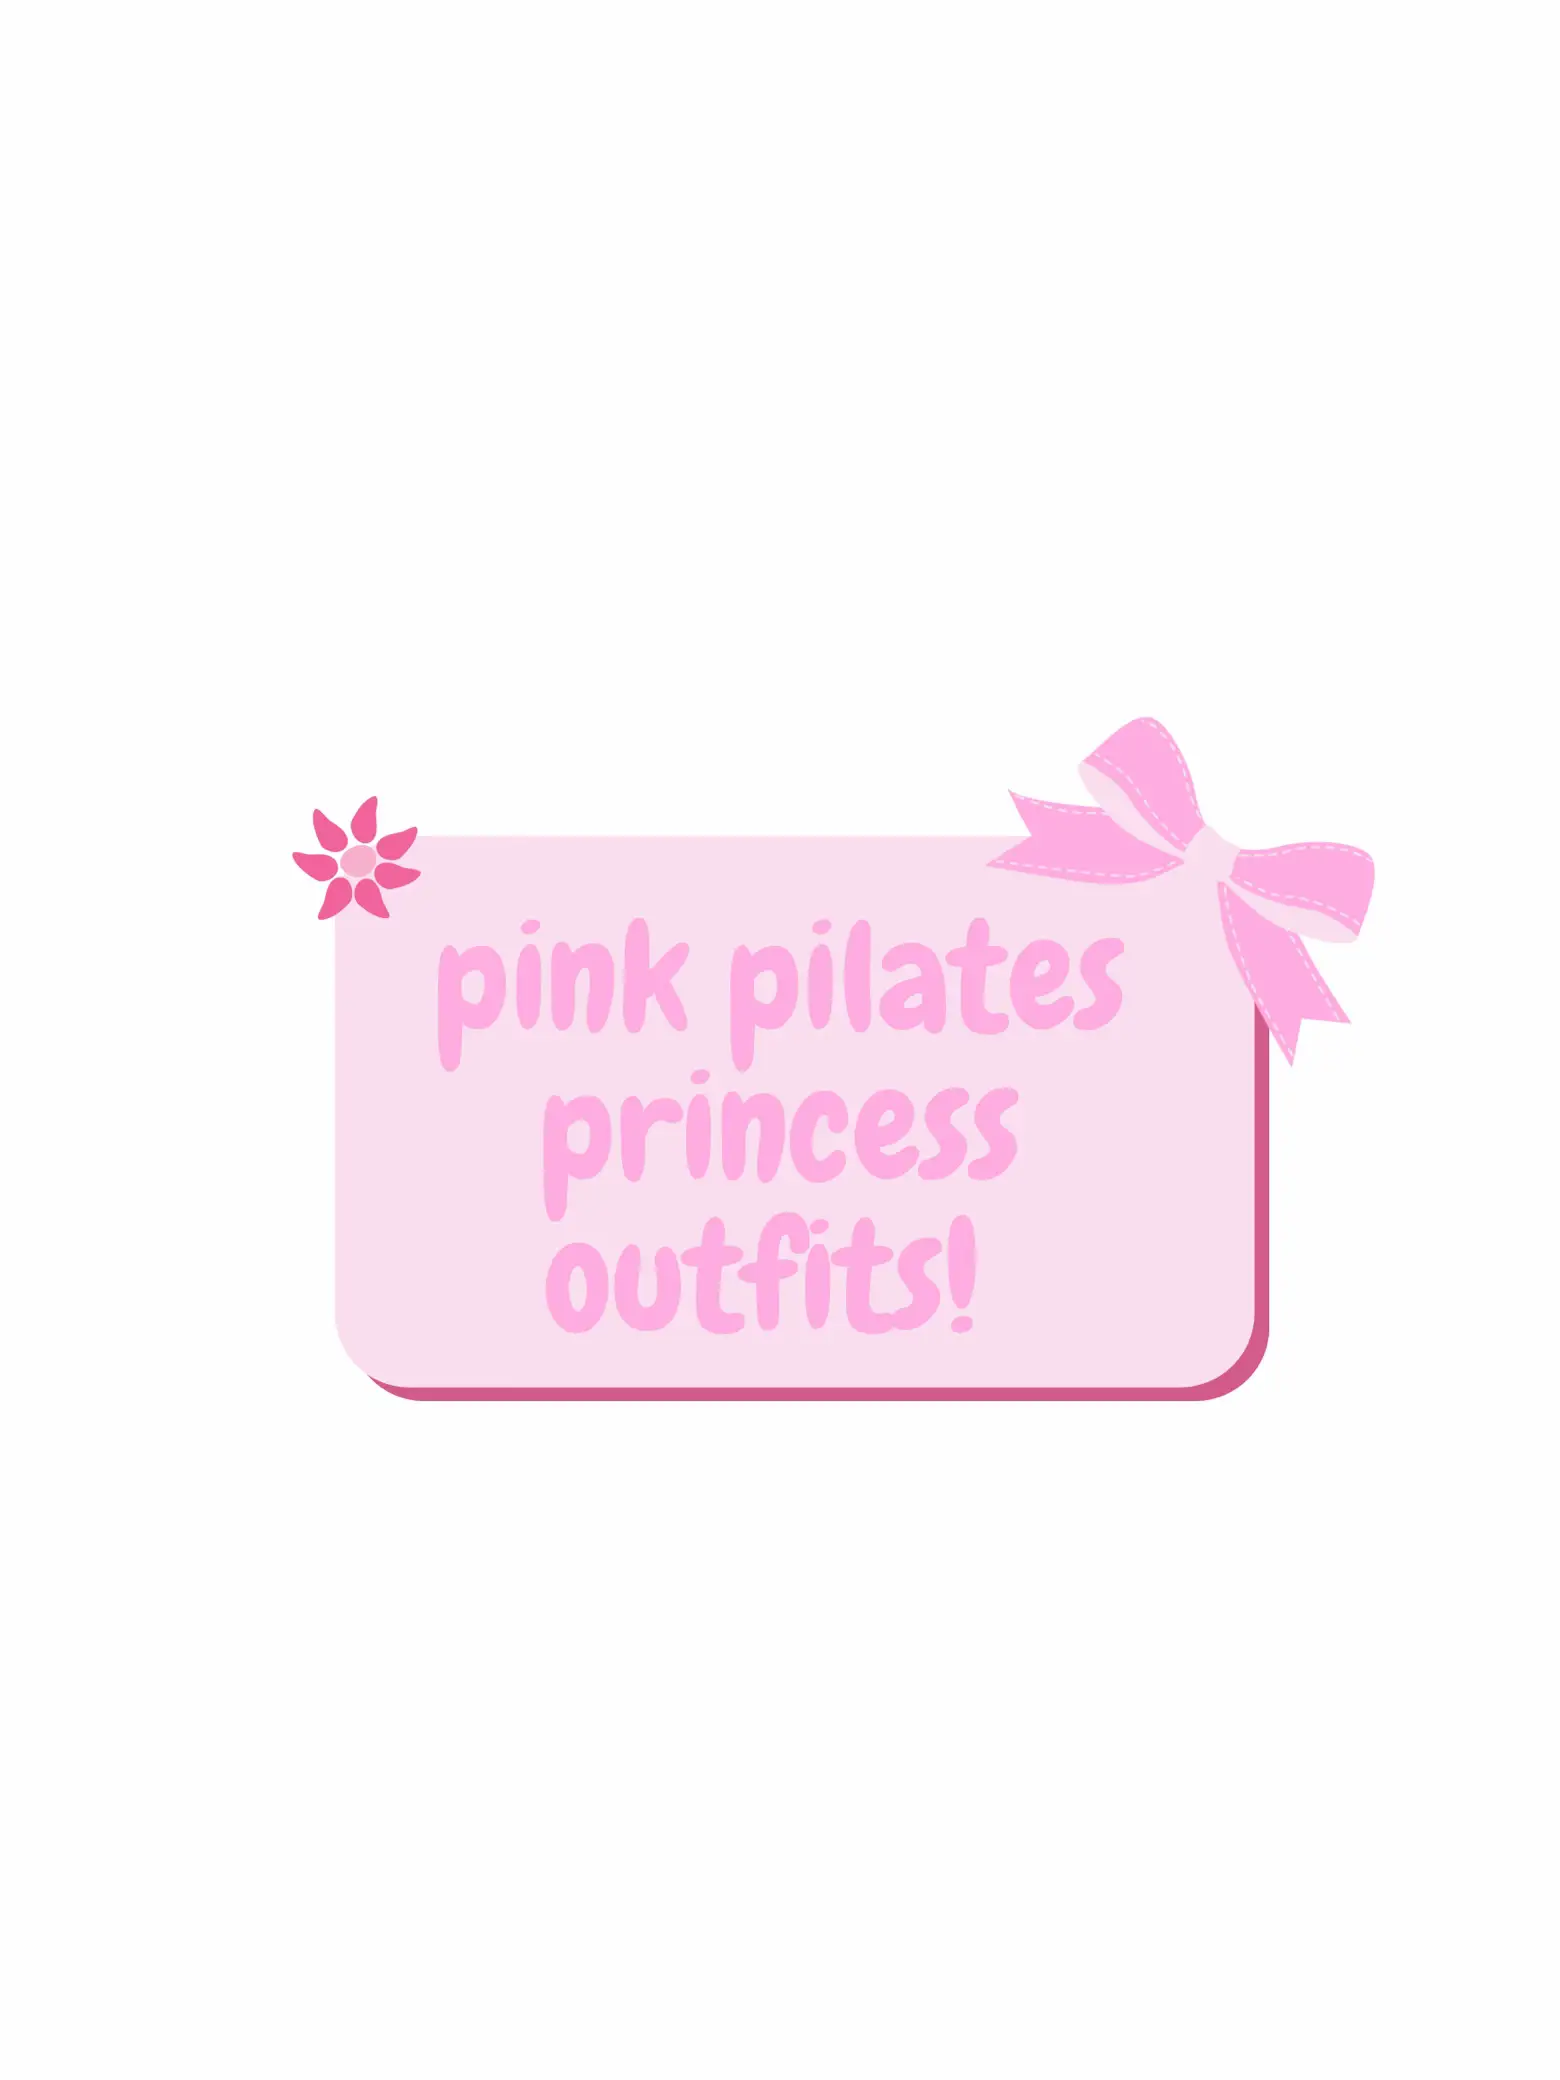 Pink pilates princess wishlist :) #pinkpilatesprincess #coquette #doll